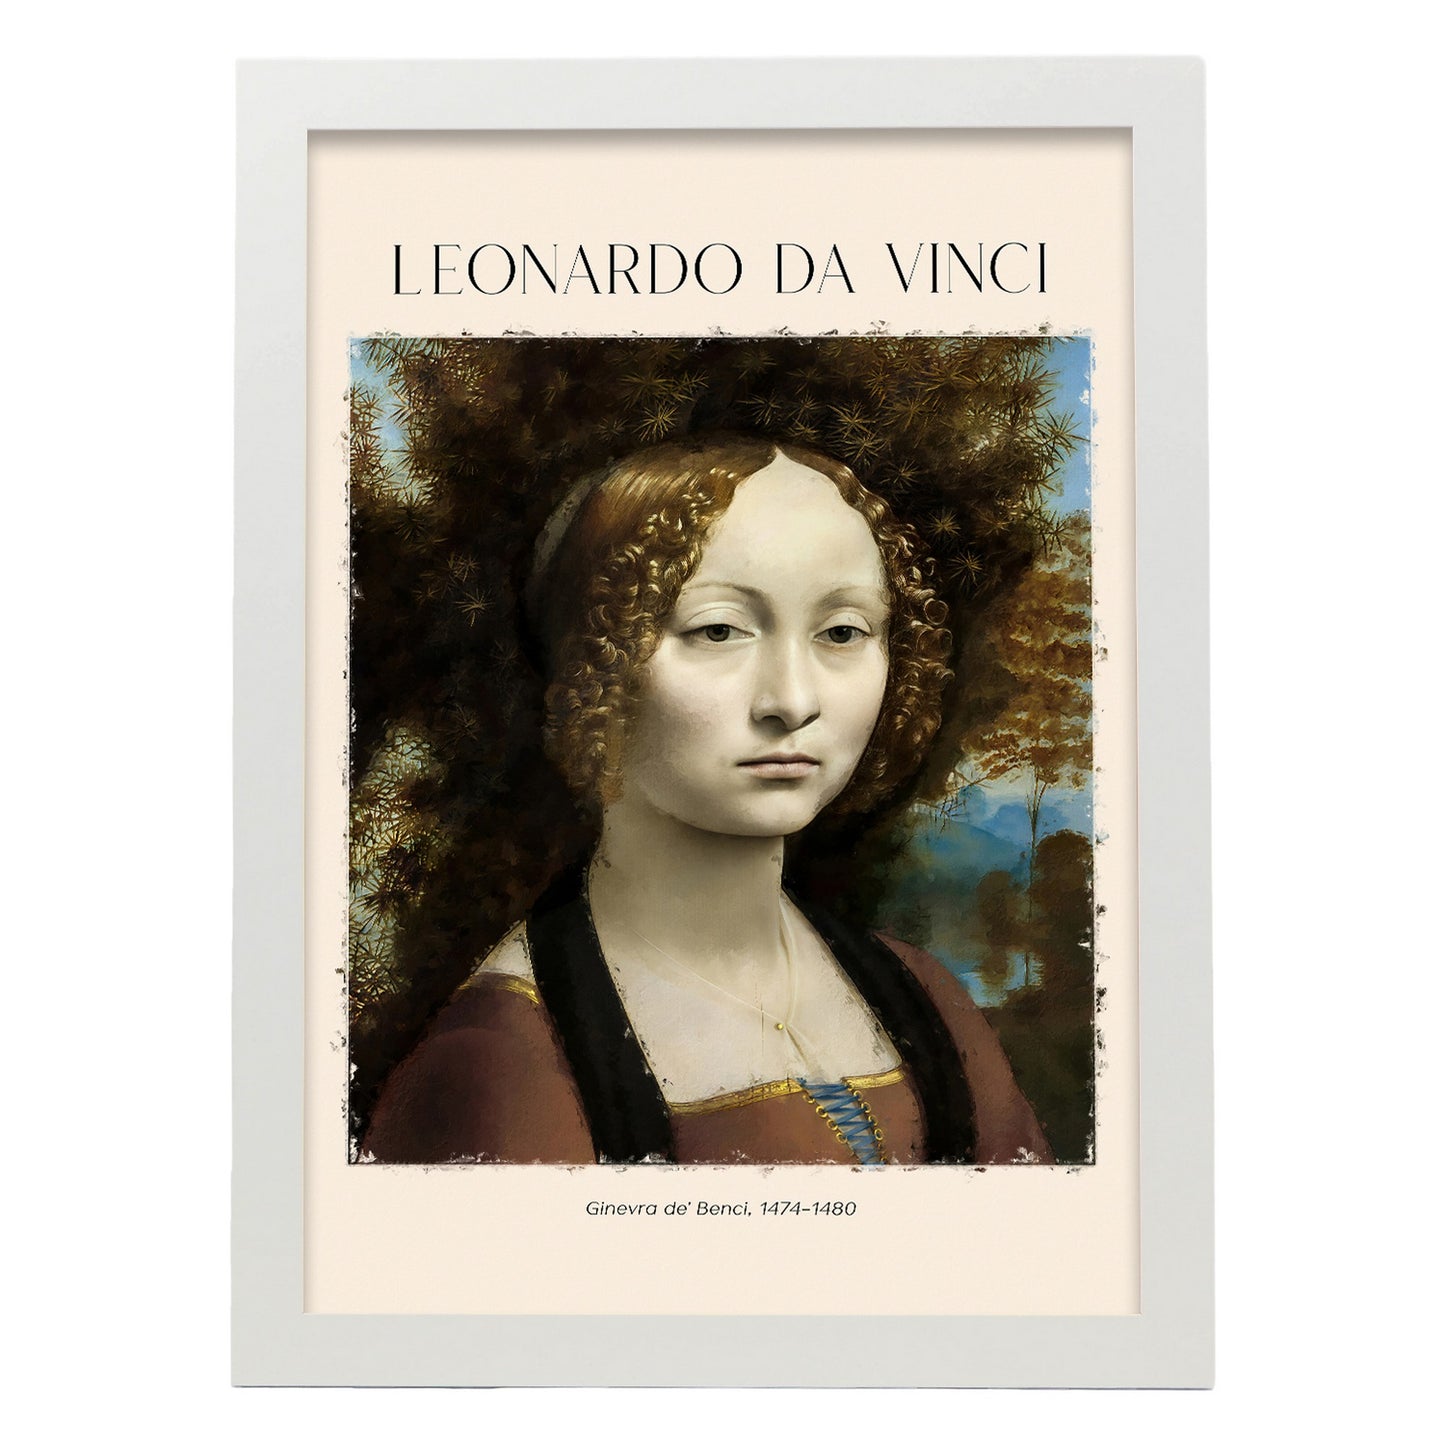 Lámina de Ginevra de Benci inspirada en Leonardo da Vinci